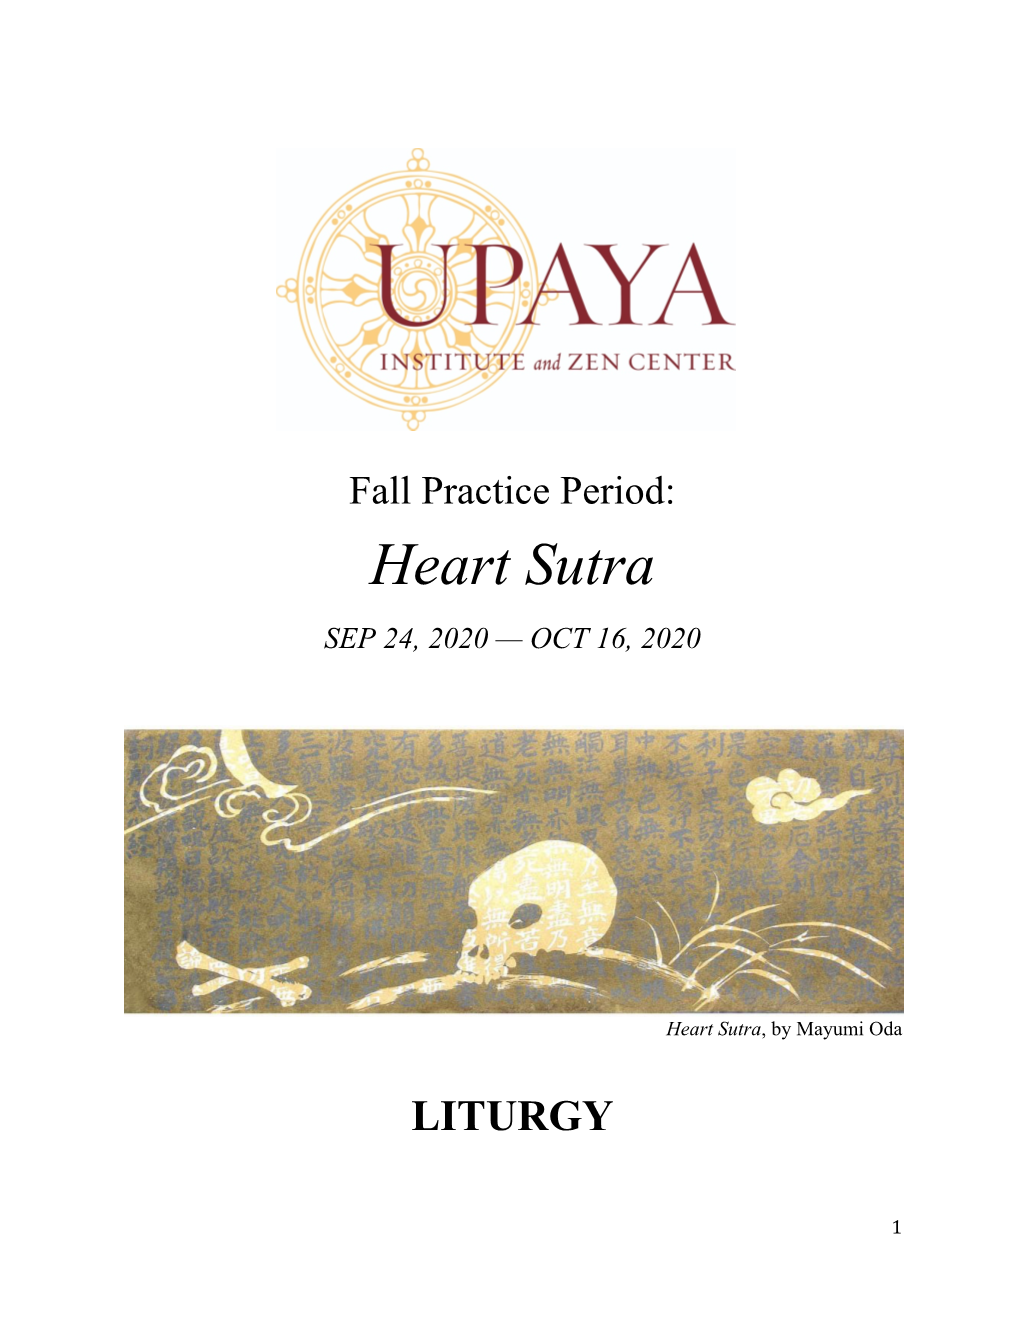 Upaya Fall Practice Period 2020 Liturgy